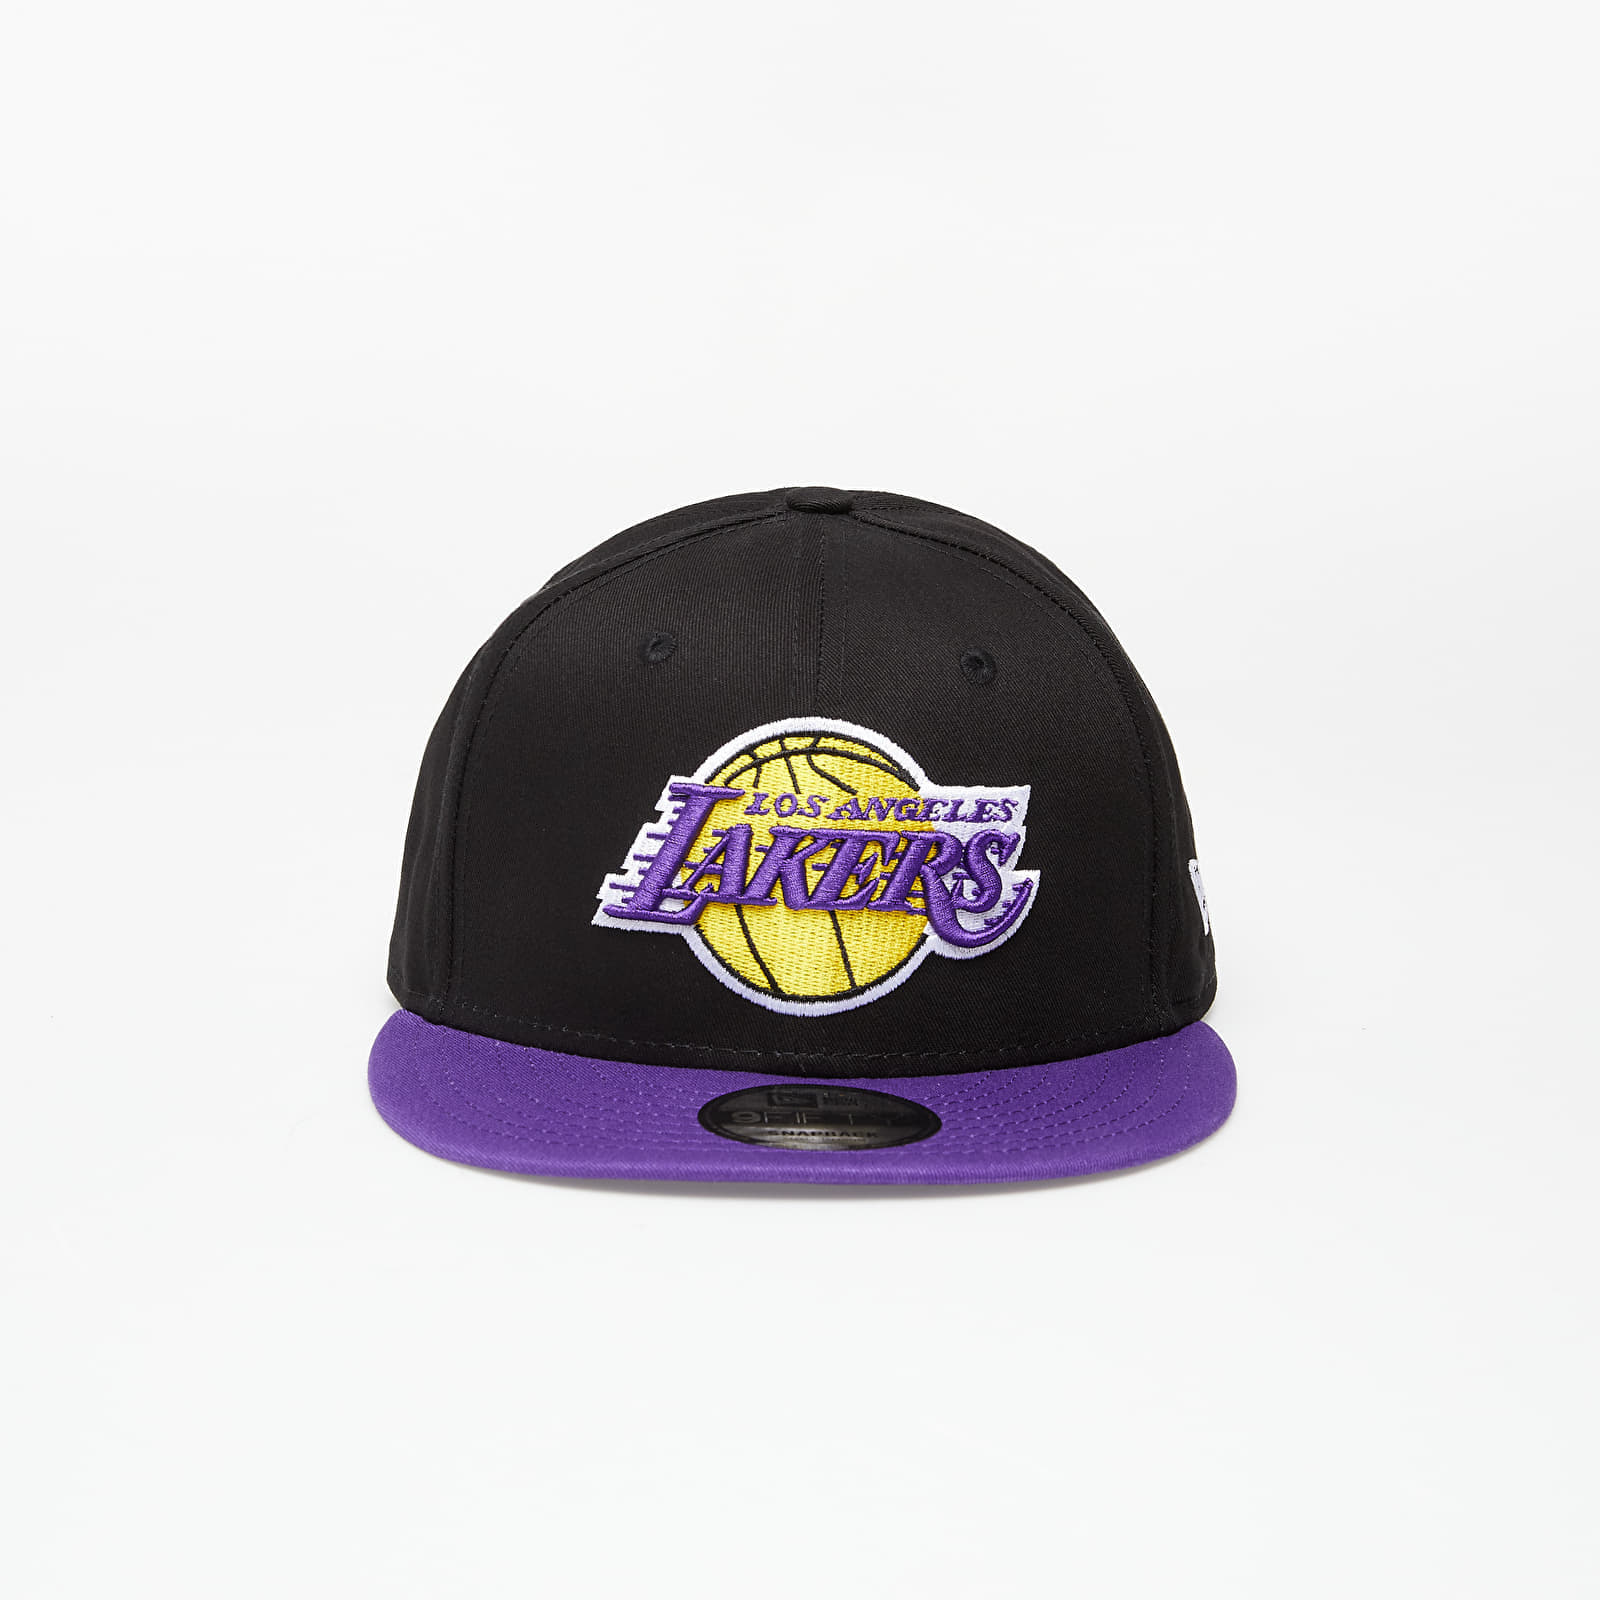 New Era 950 NBA NOS LA Lakers Black/ Purple